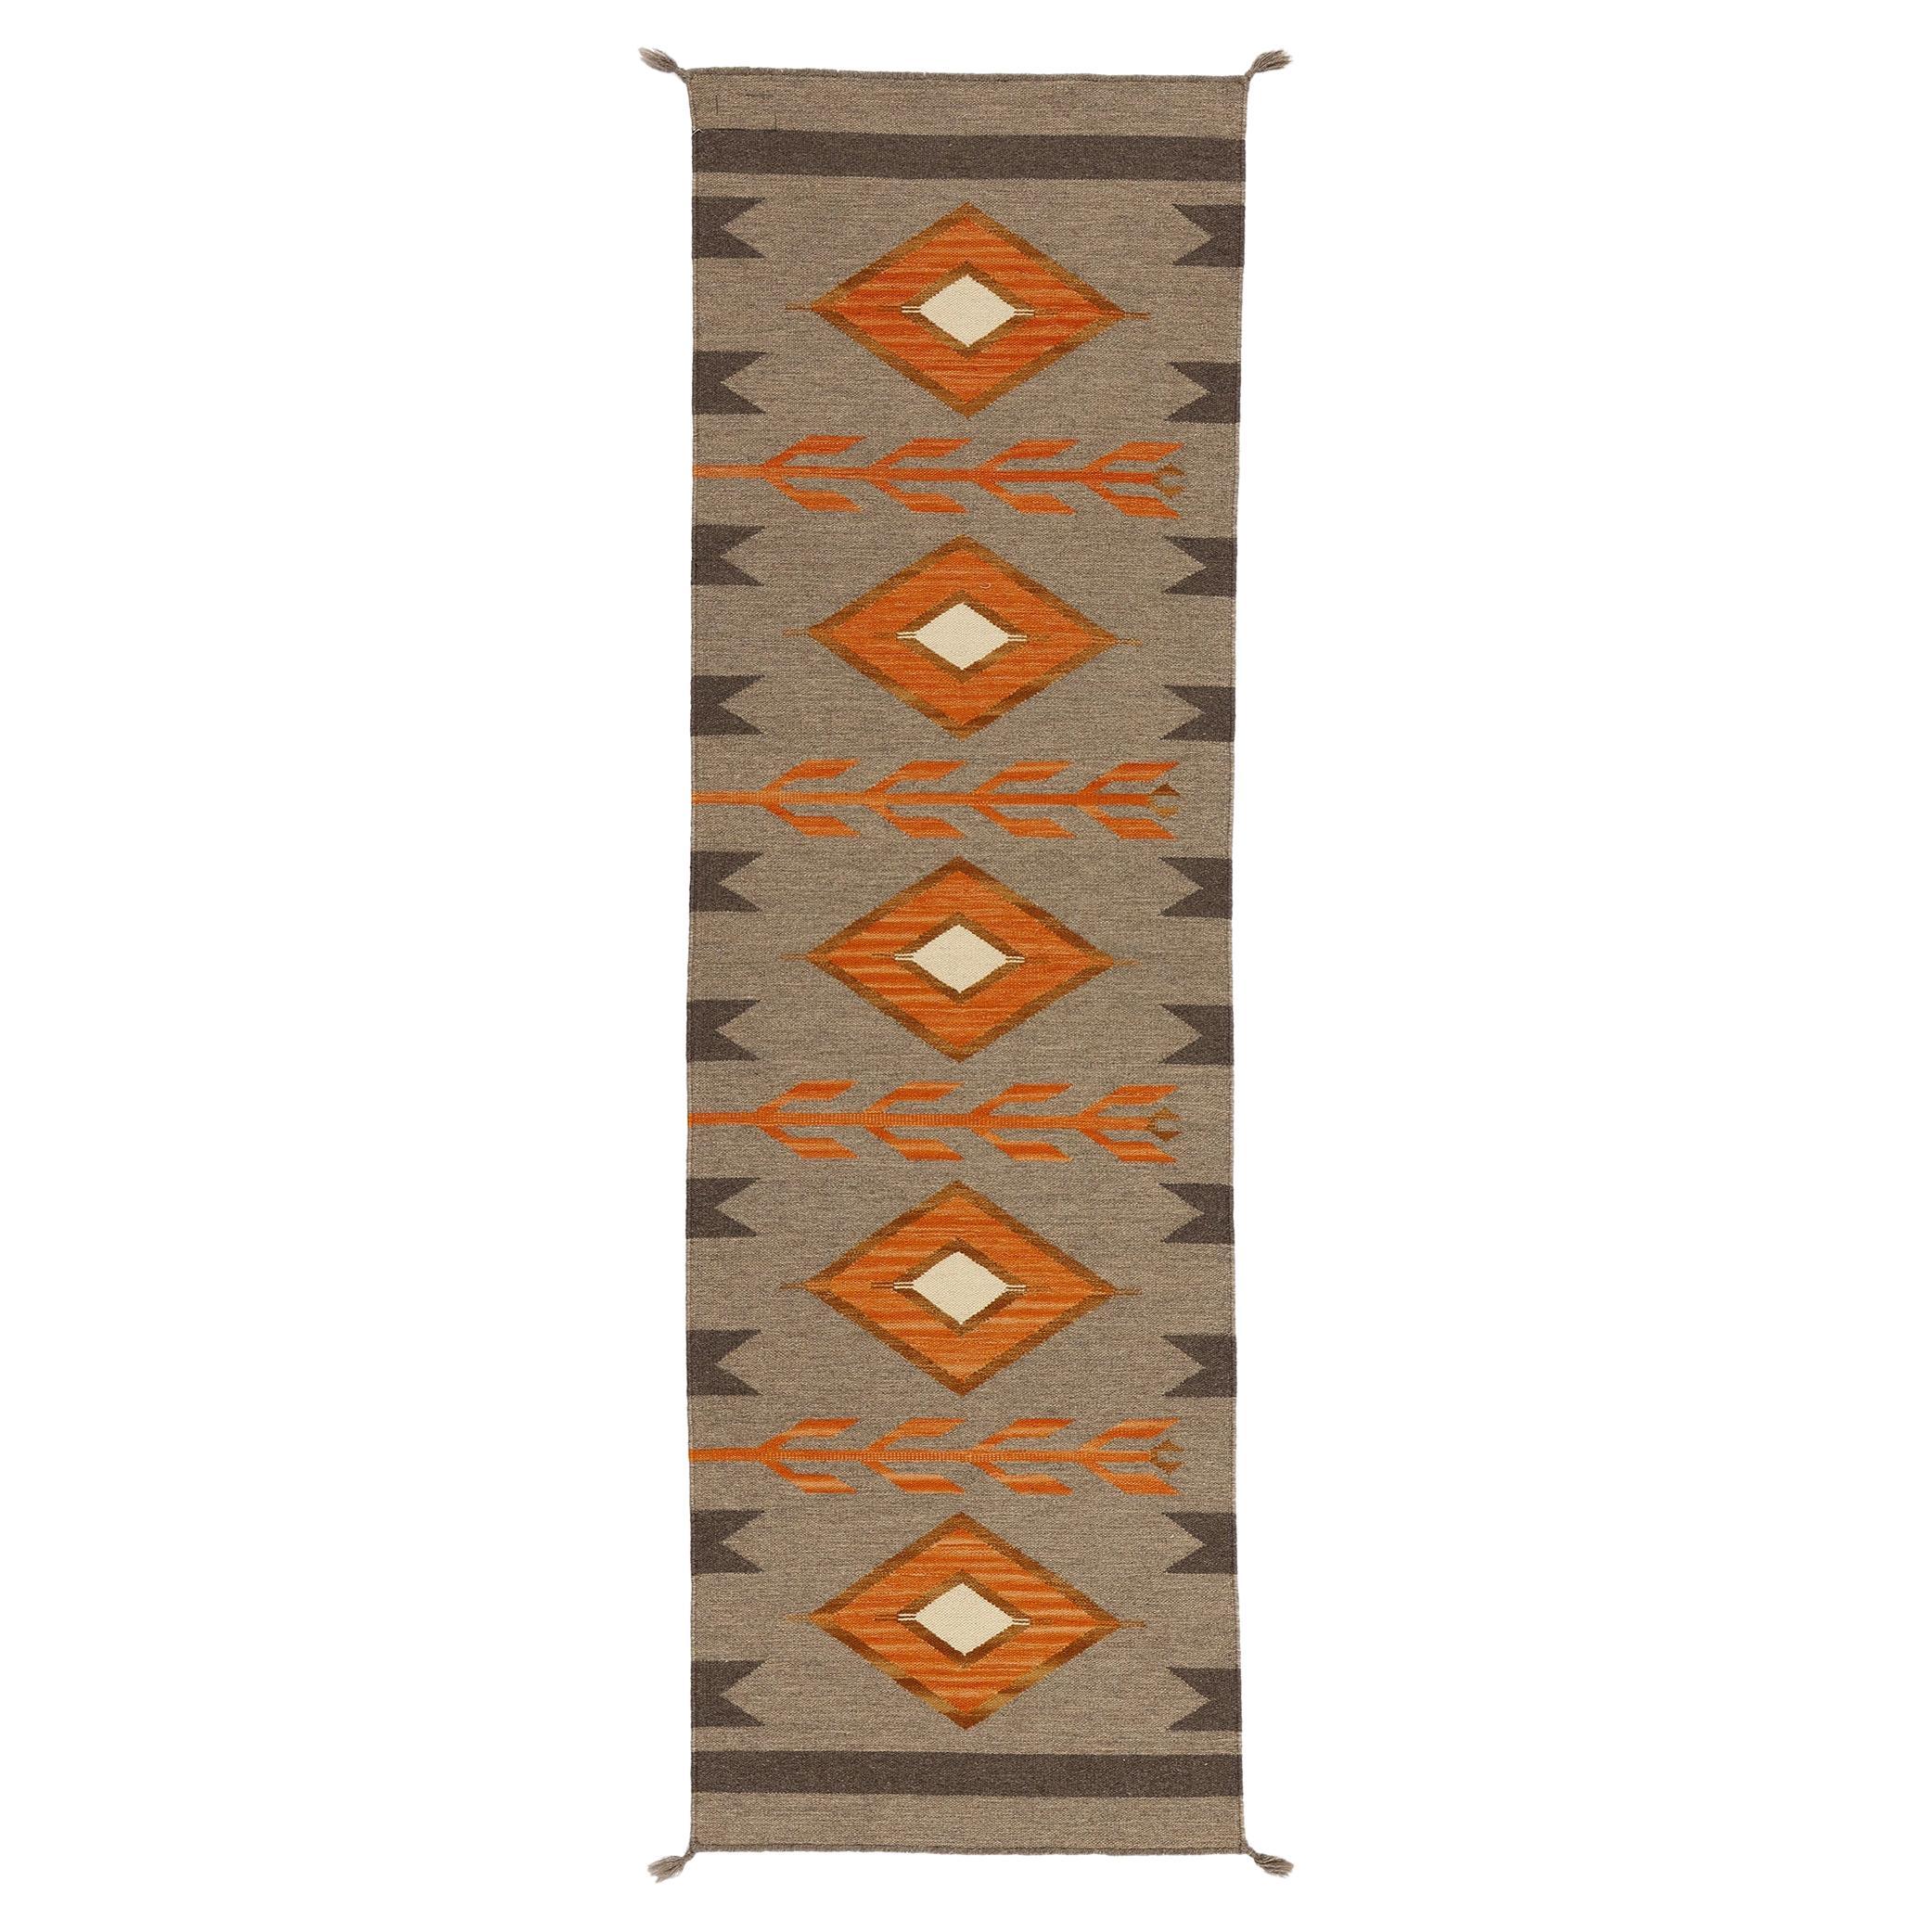 Contemporary Santa Fe Southwest Modern Navajo-Style Rug